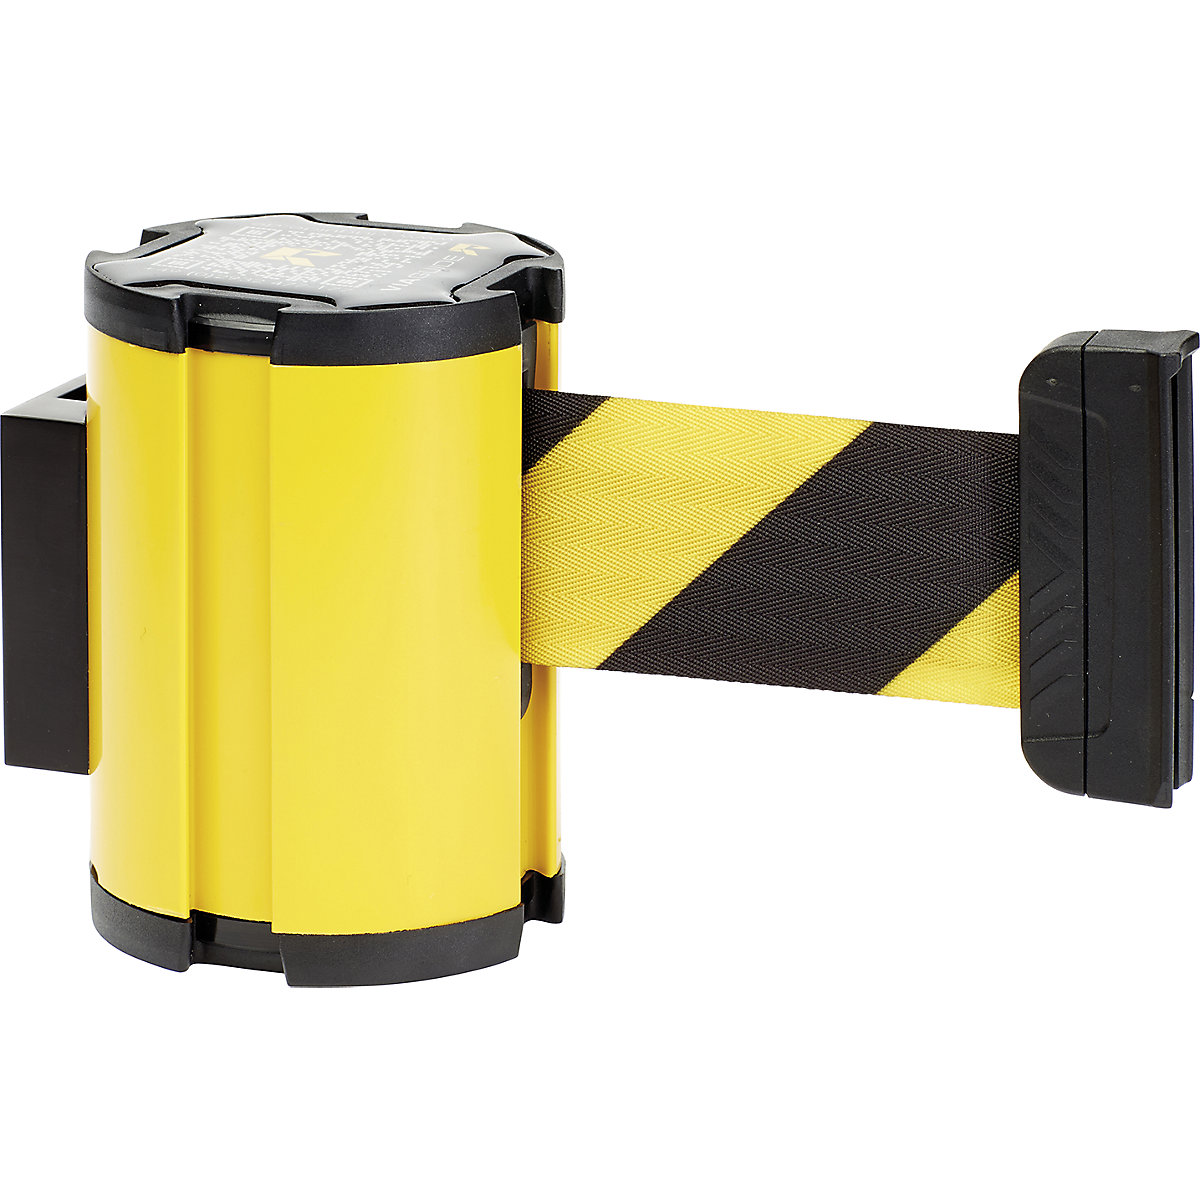 Bandcassette, uittreklengte max. 3000 mm, cassette geel, band geel / zwart-4